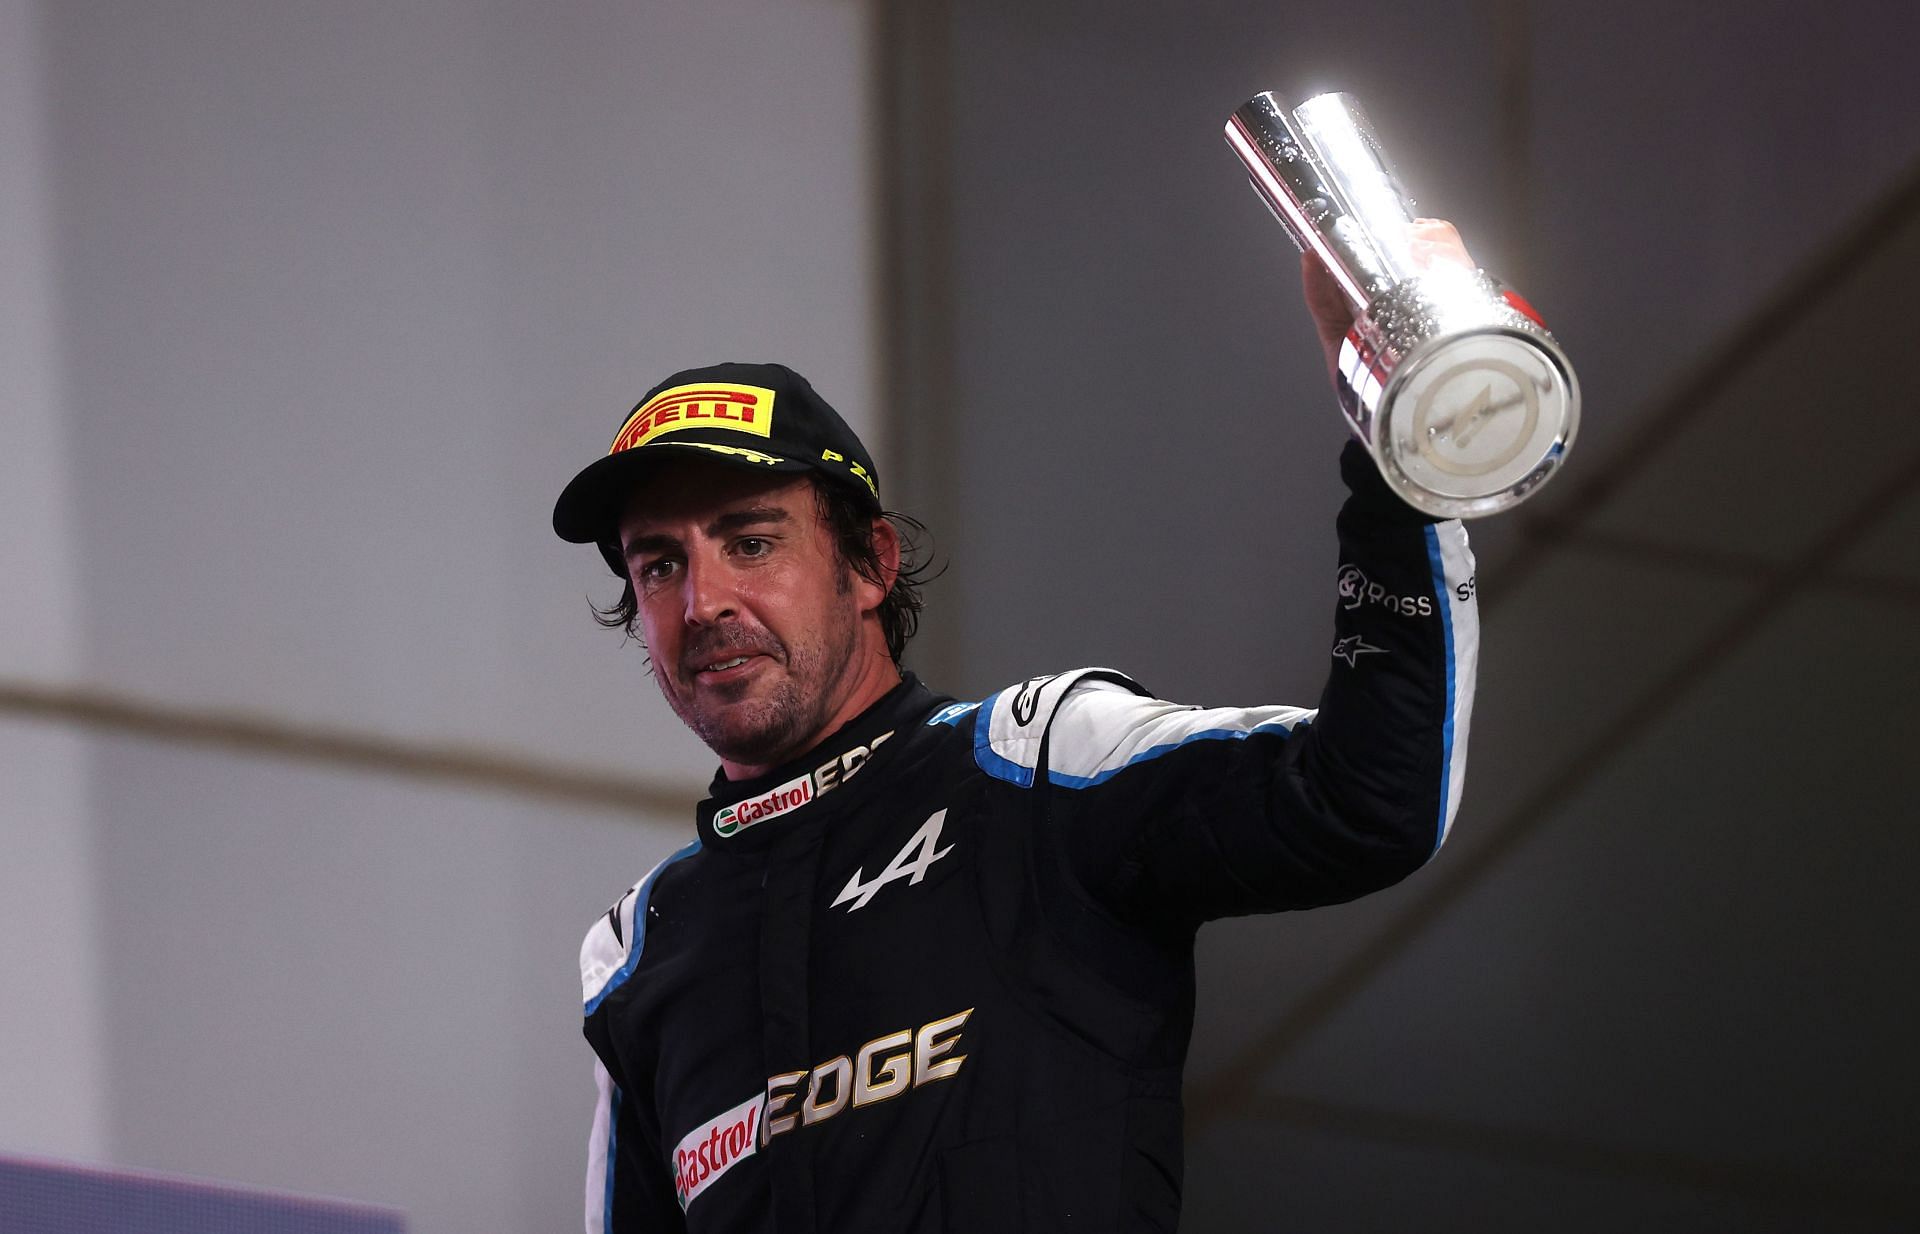 F1 Grand Prix of Qatar - Fernando Alonso celebrates a podium finish